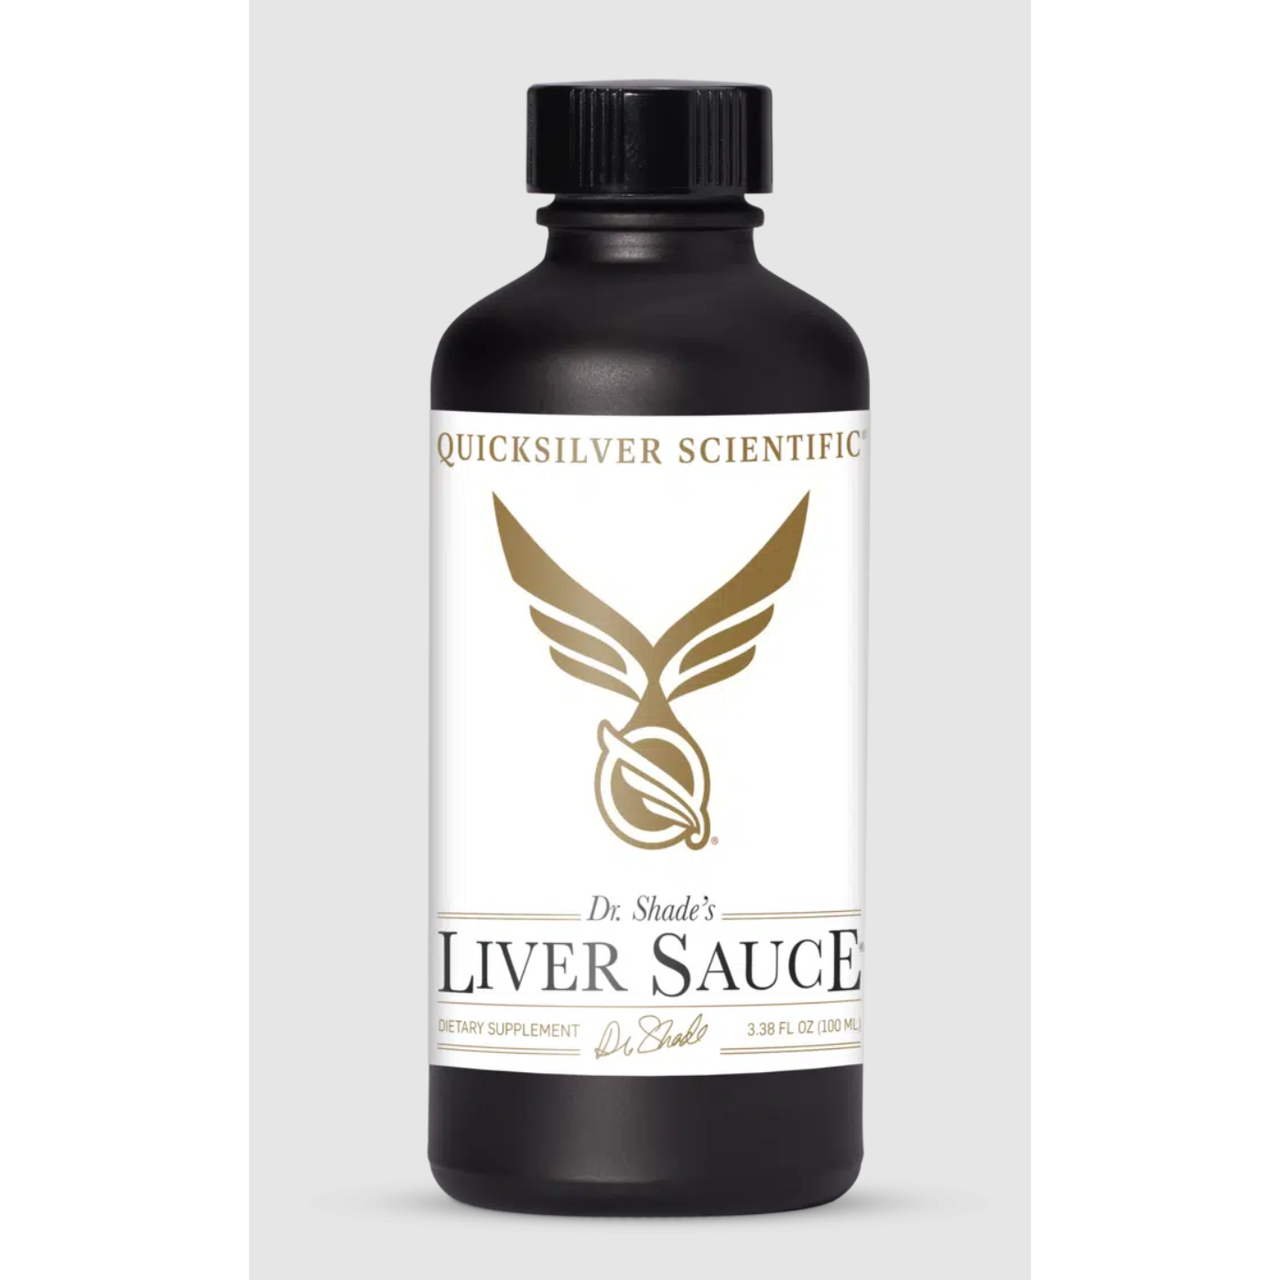 Quicksilver Scientific - Liver Sauce - Liquid Liver Cleanse with milk thistle, dandelion, DIM and antioxidants